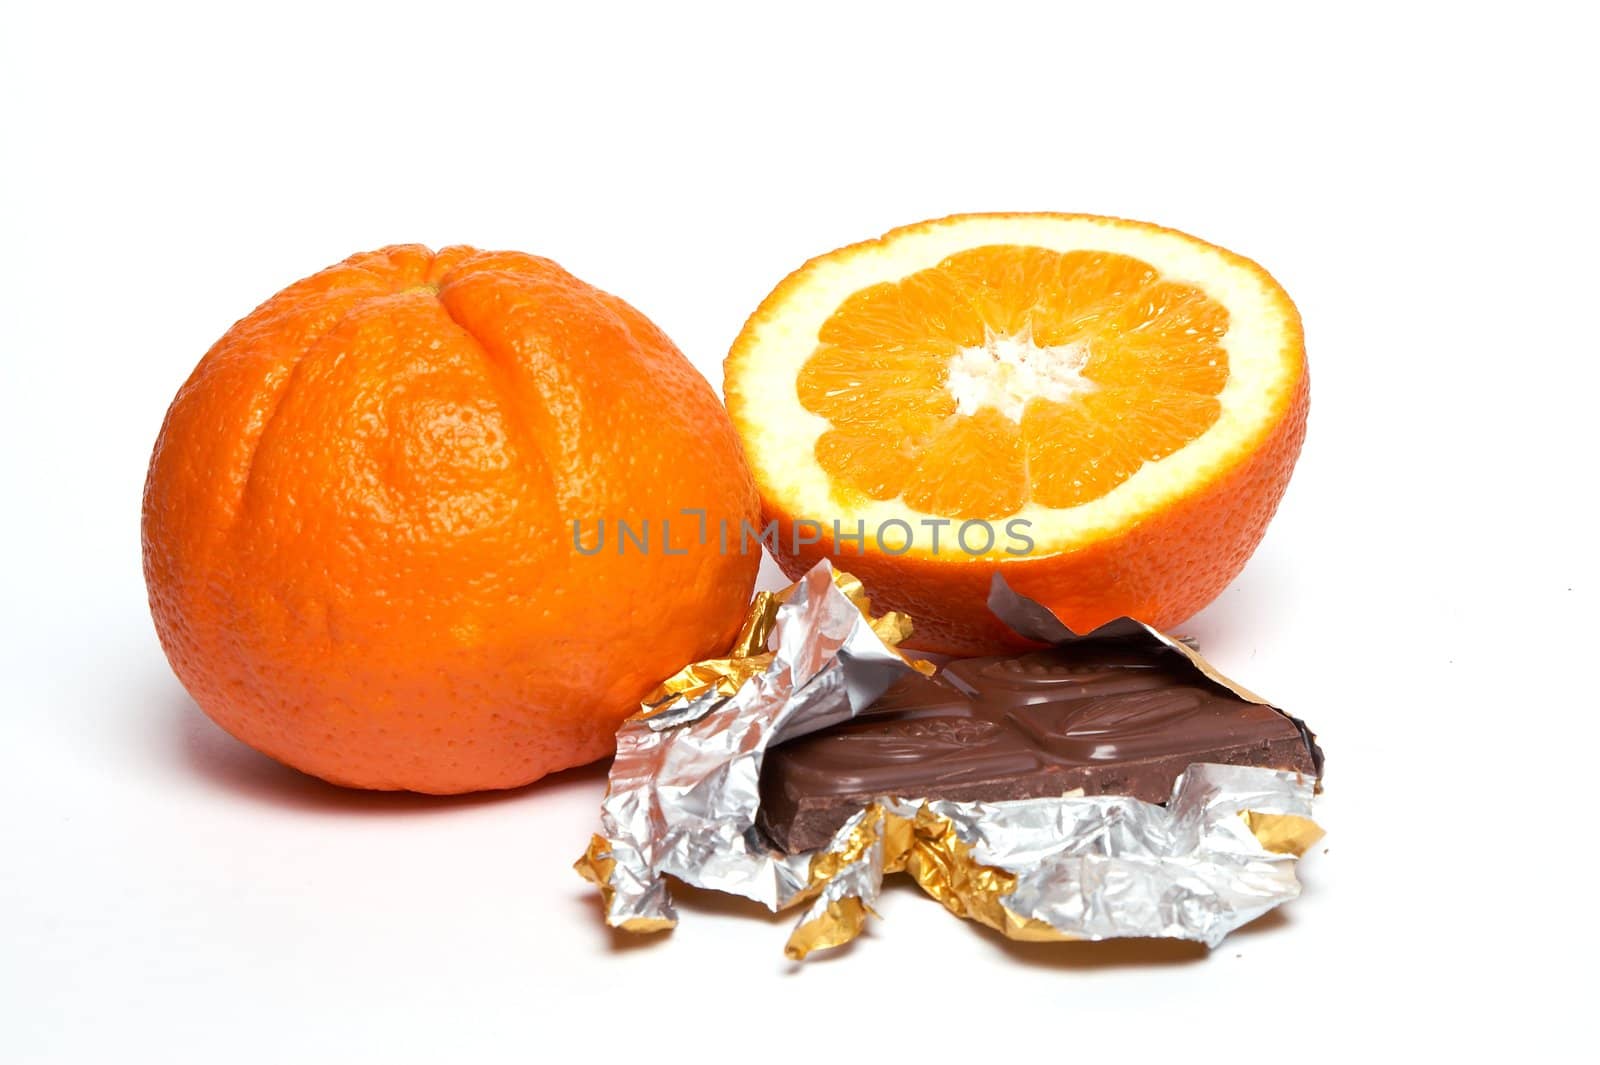 chocolate and orange by amaxim